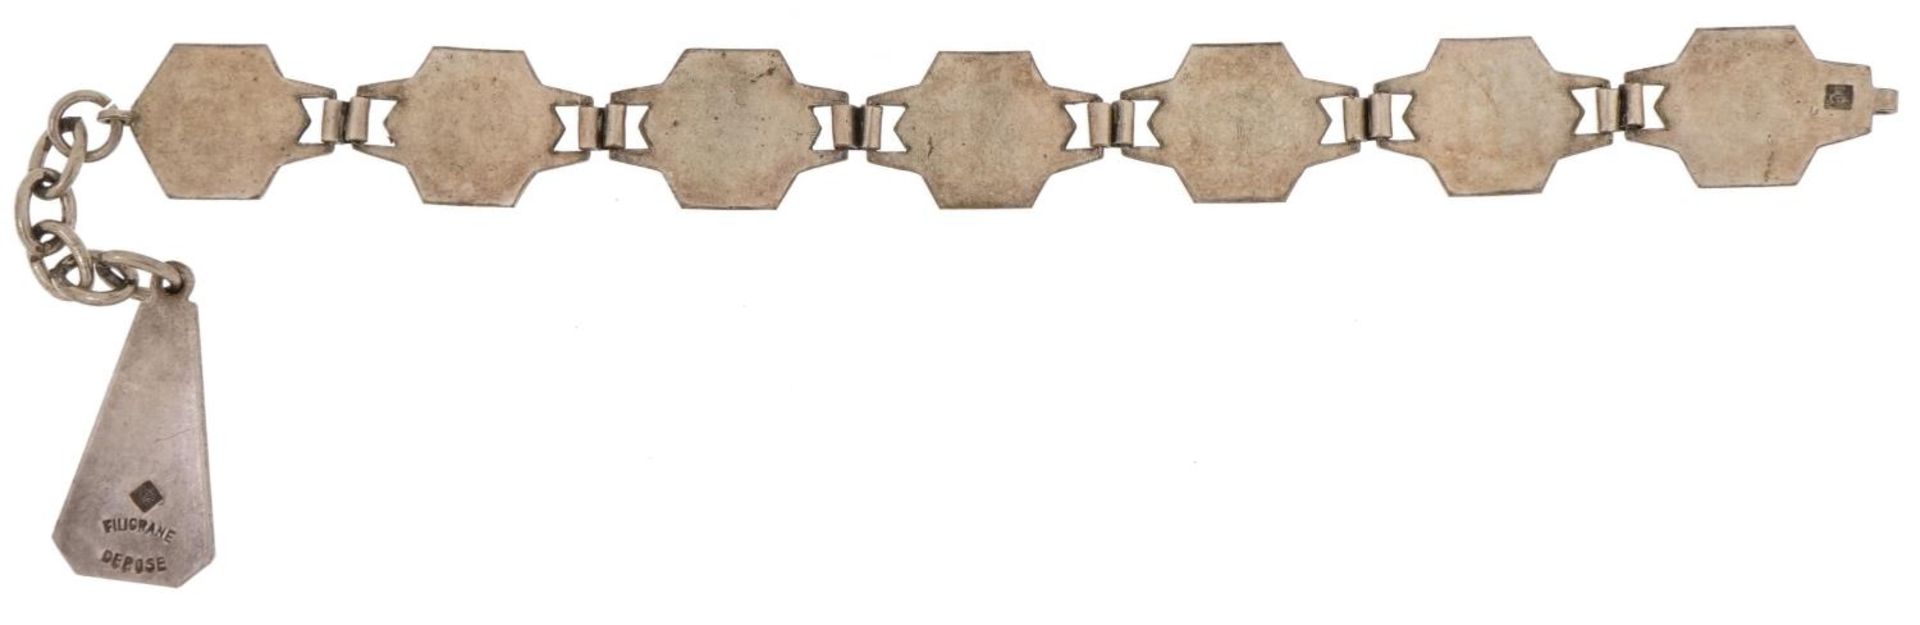 French silver souvenir bracelet impressed Filigrane Depose, 15cm in length, 12.2g : For further - Image 3 of 4